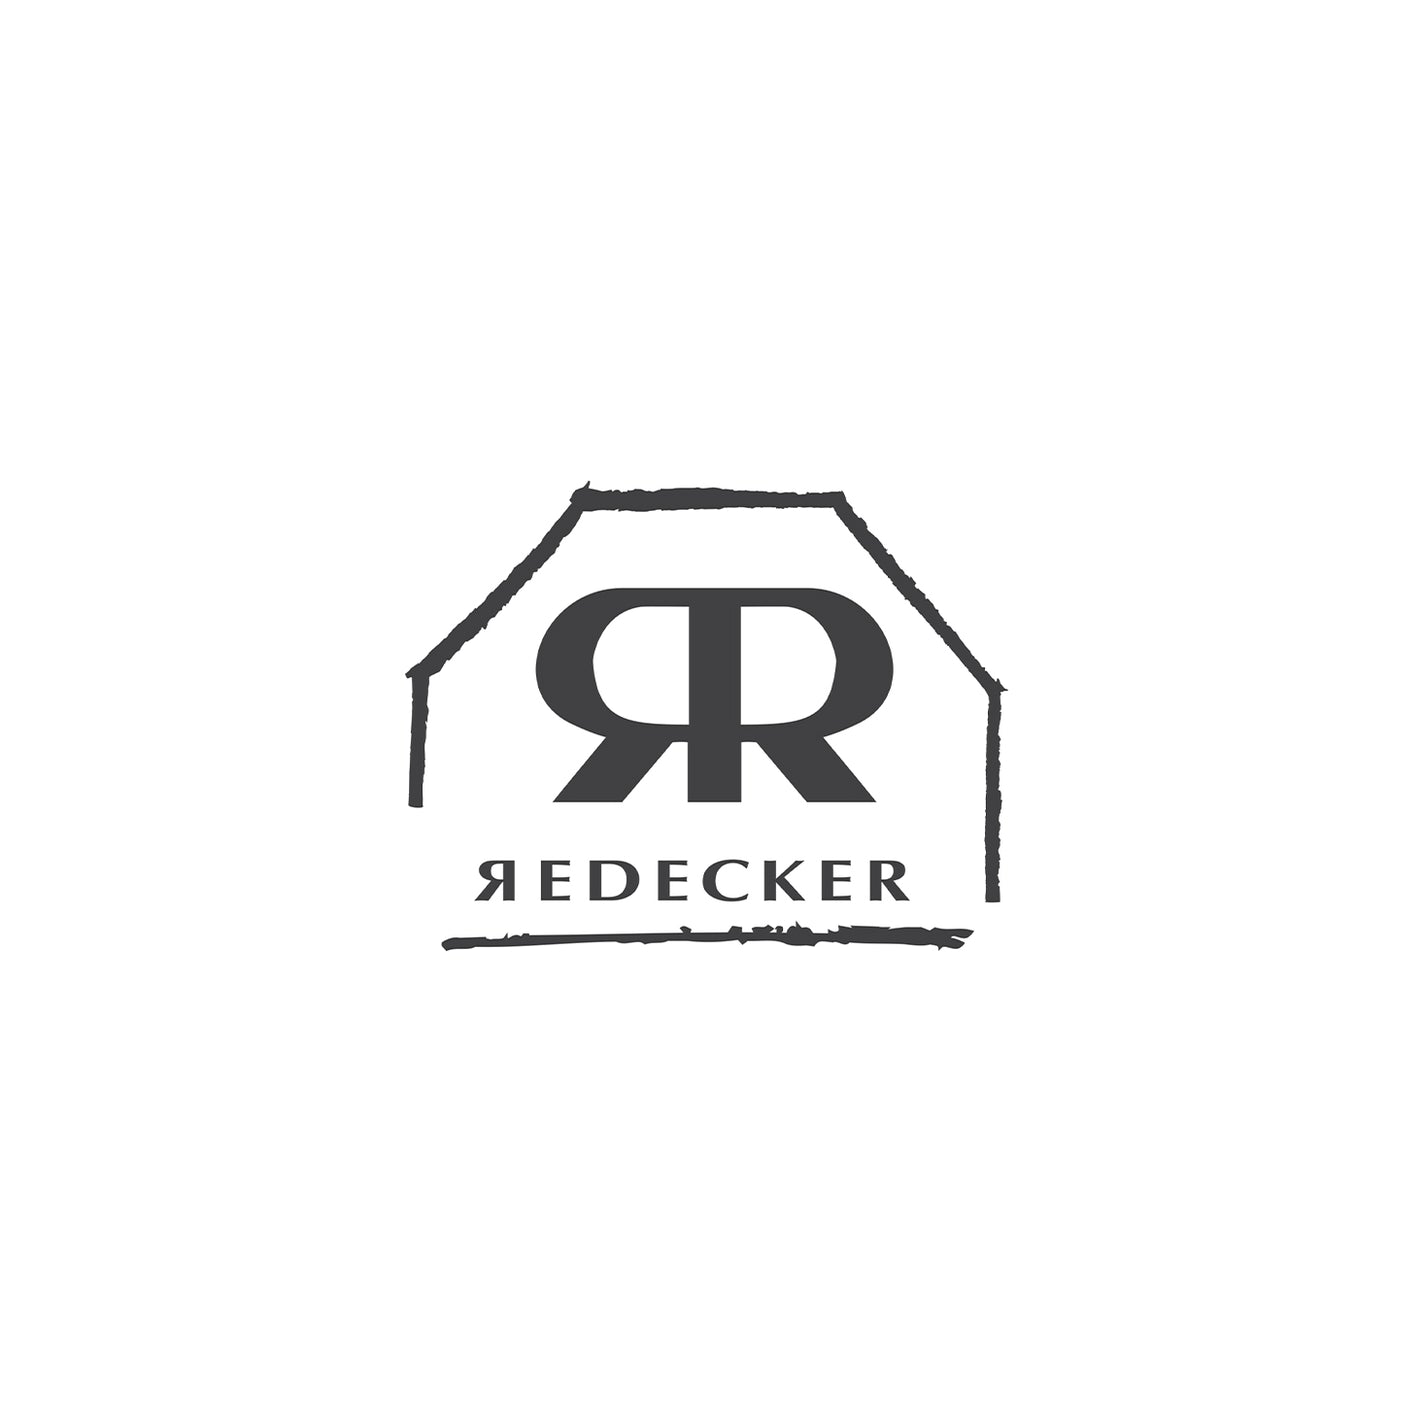 Redecker Polish Applicator - Black